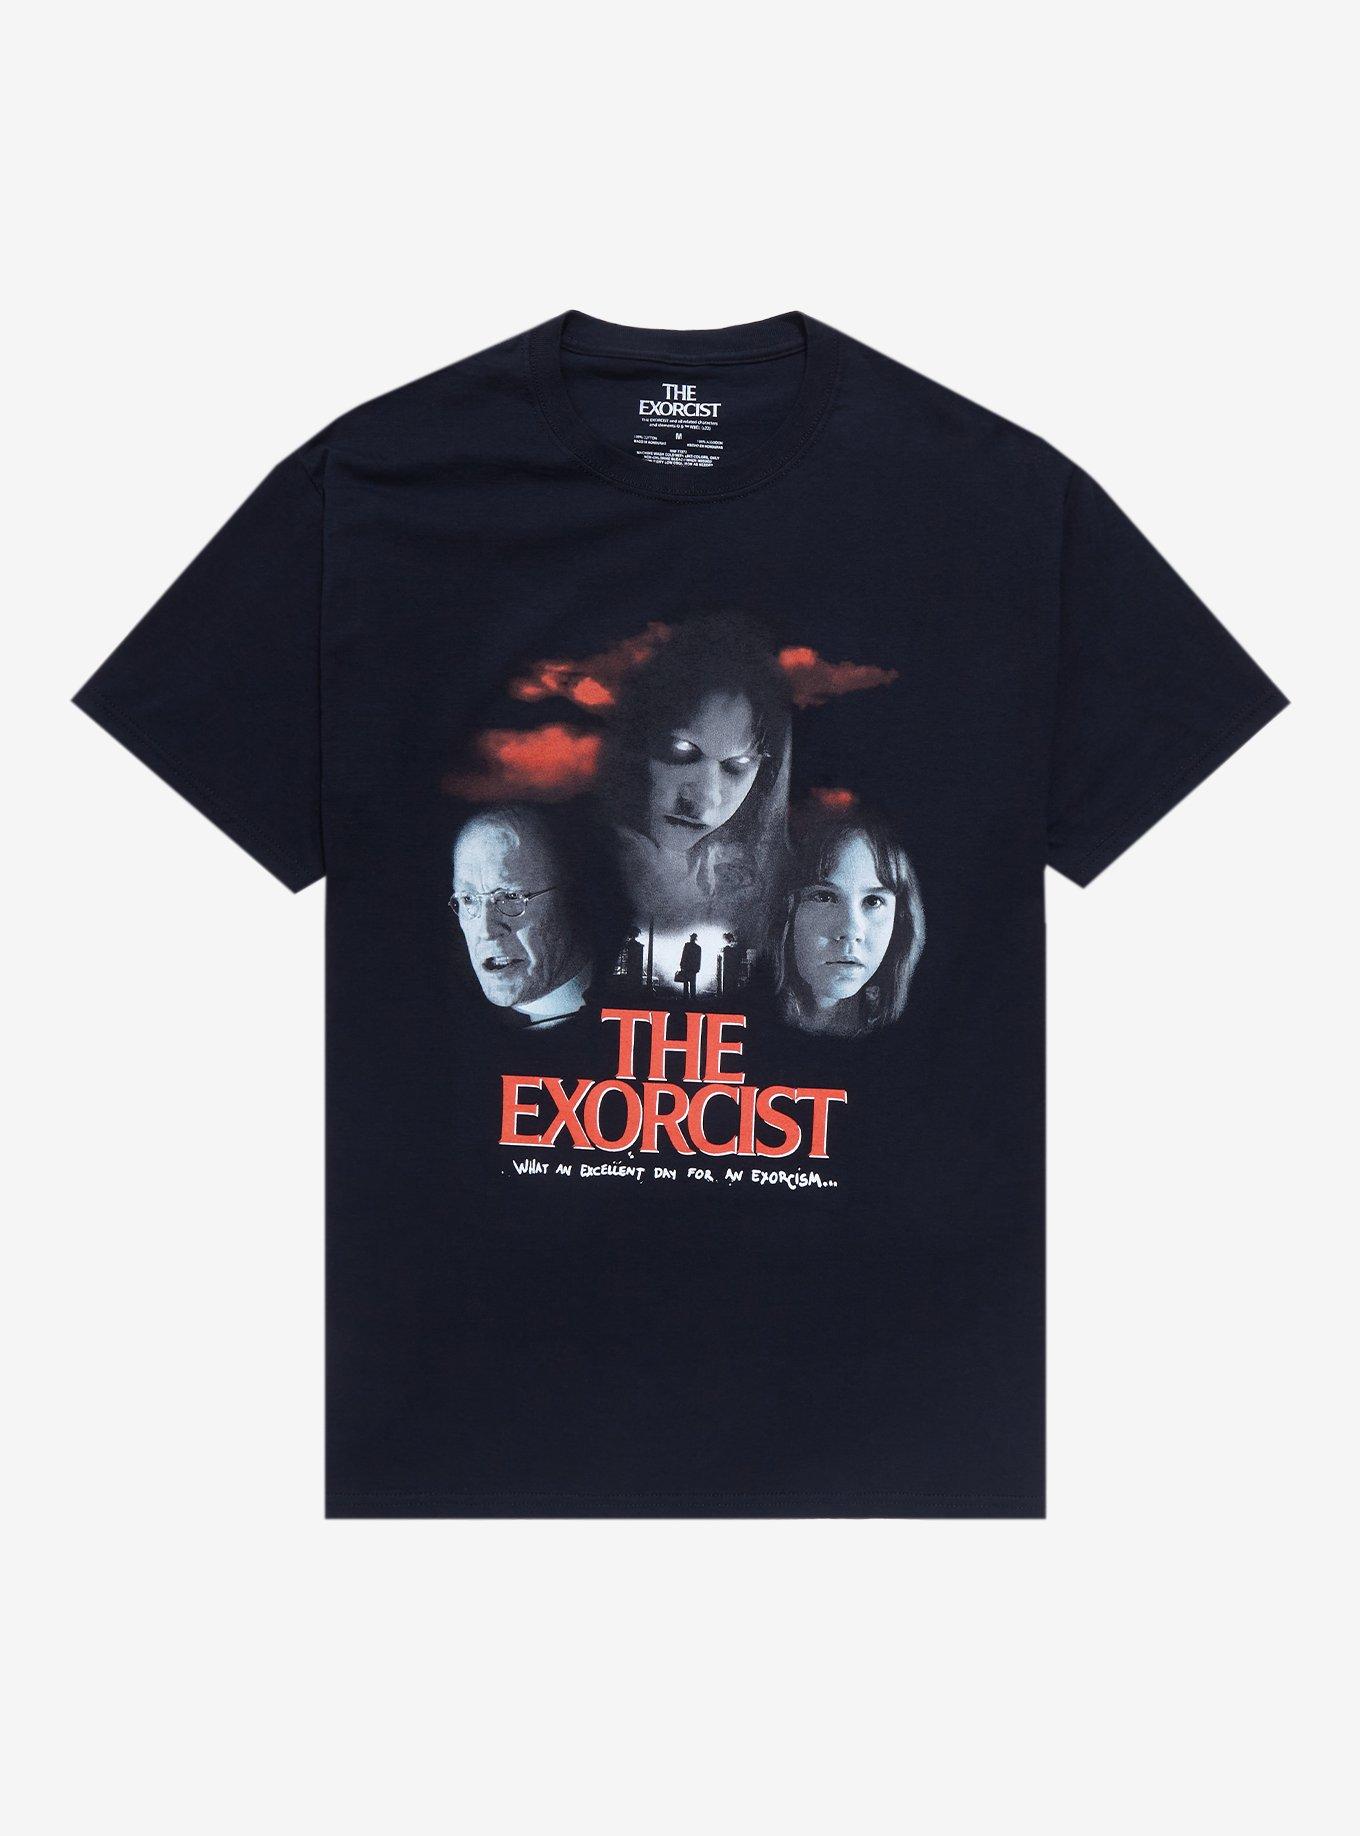 The Exorcist Collage Boyfriend Fit Girls T-Shirt